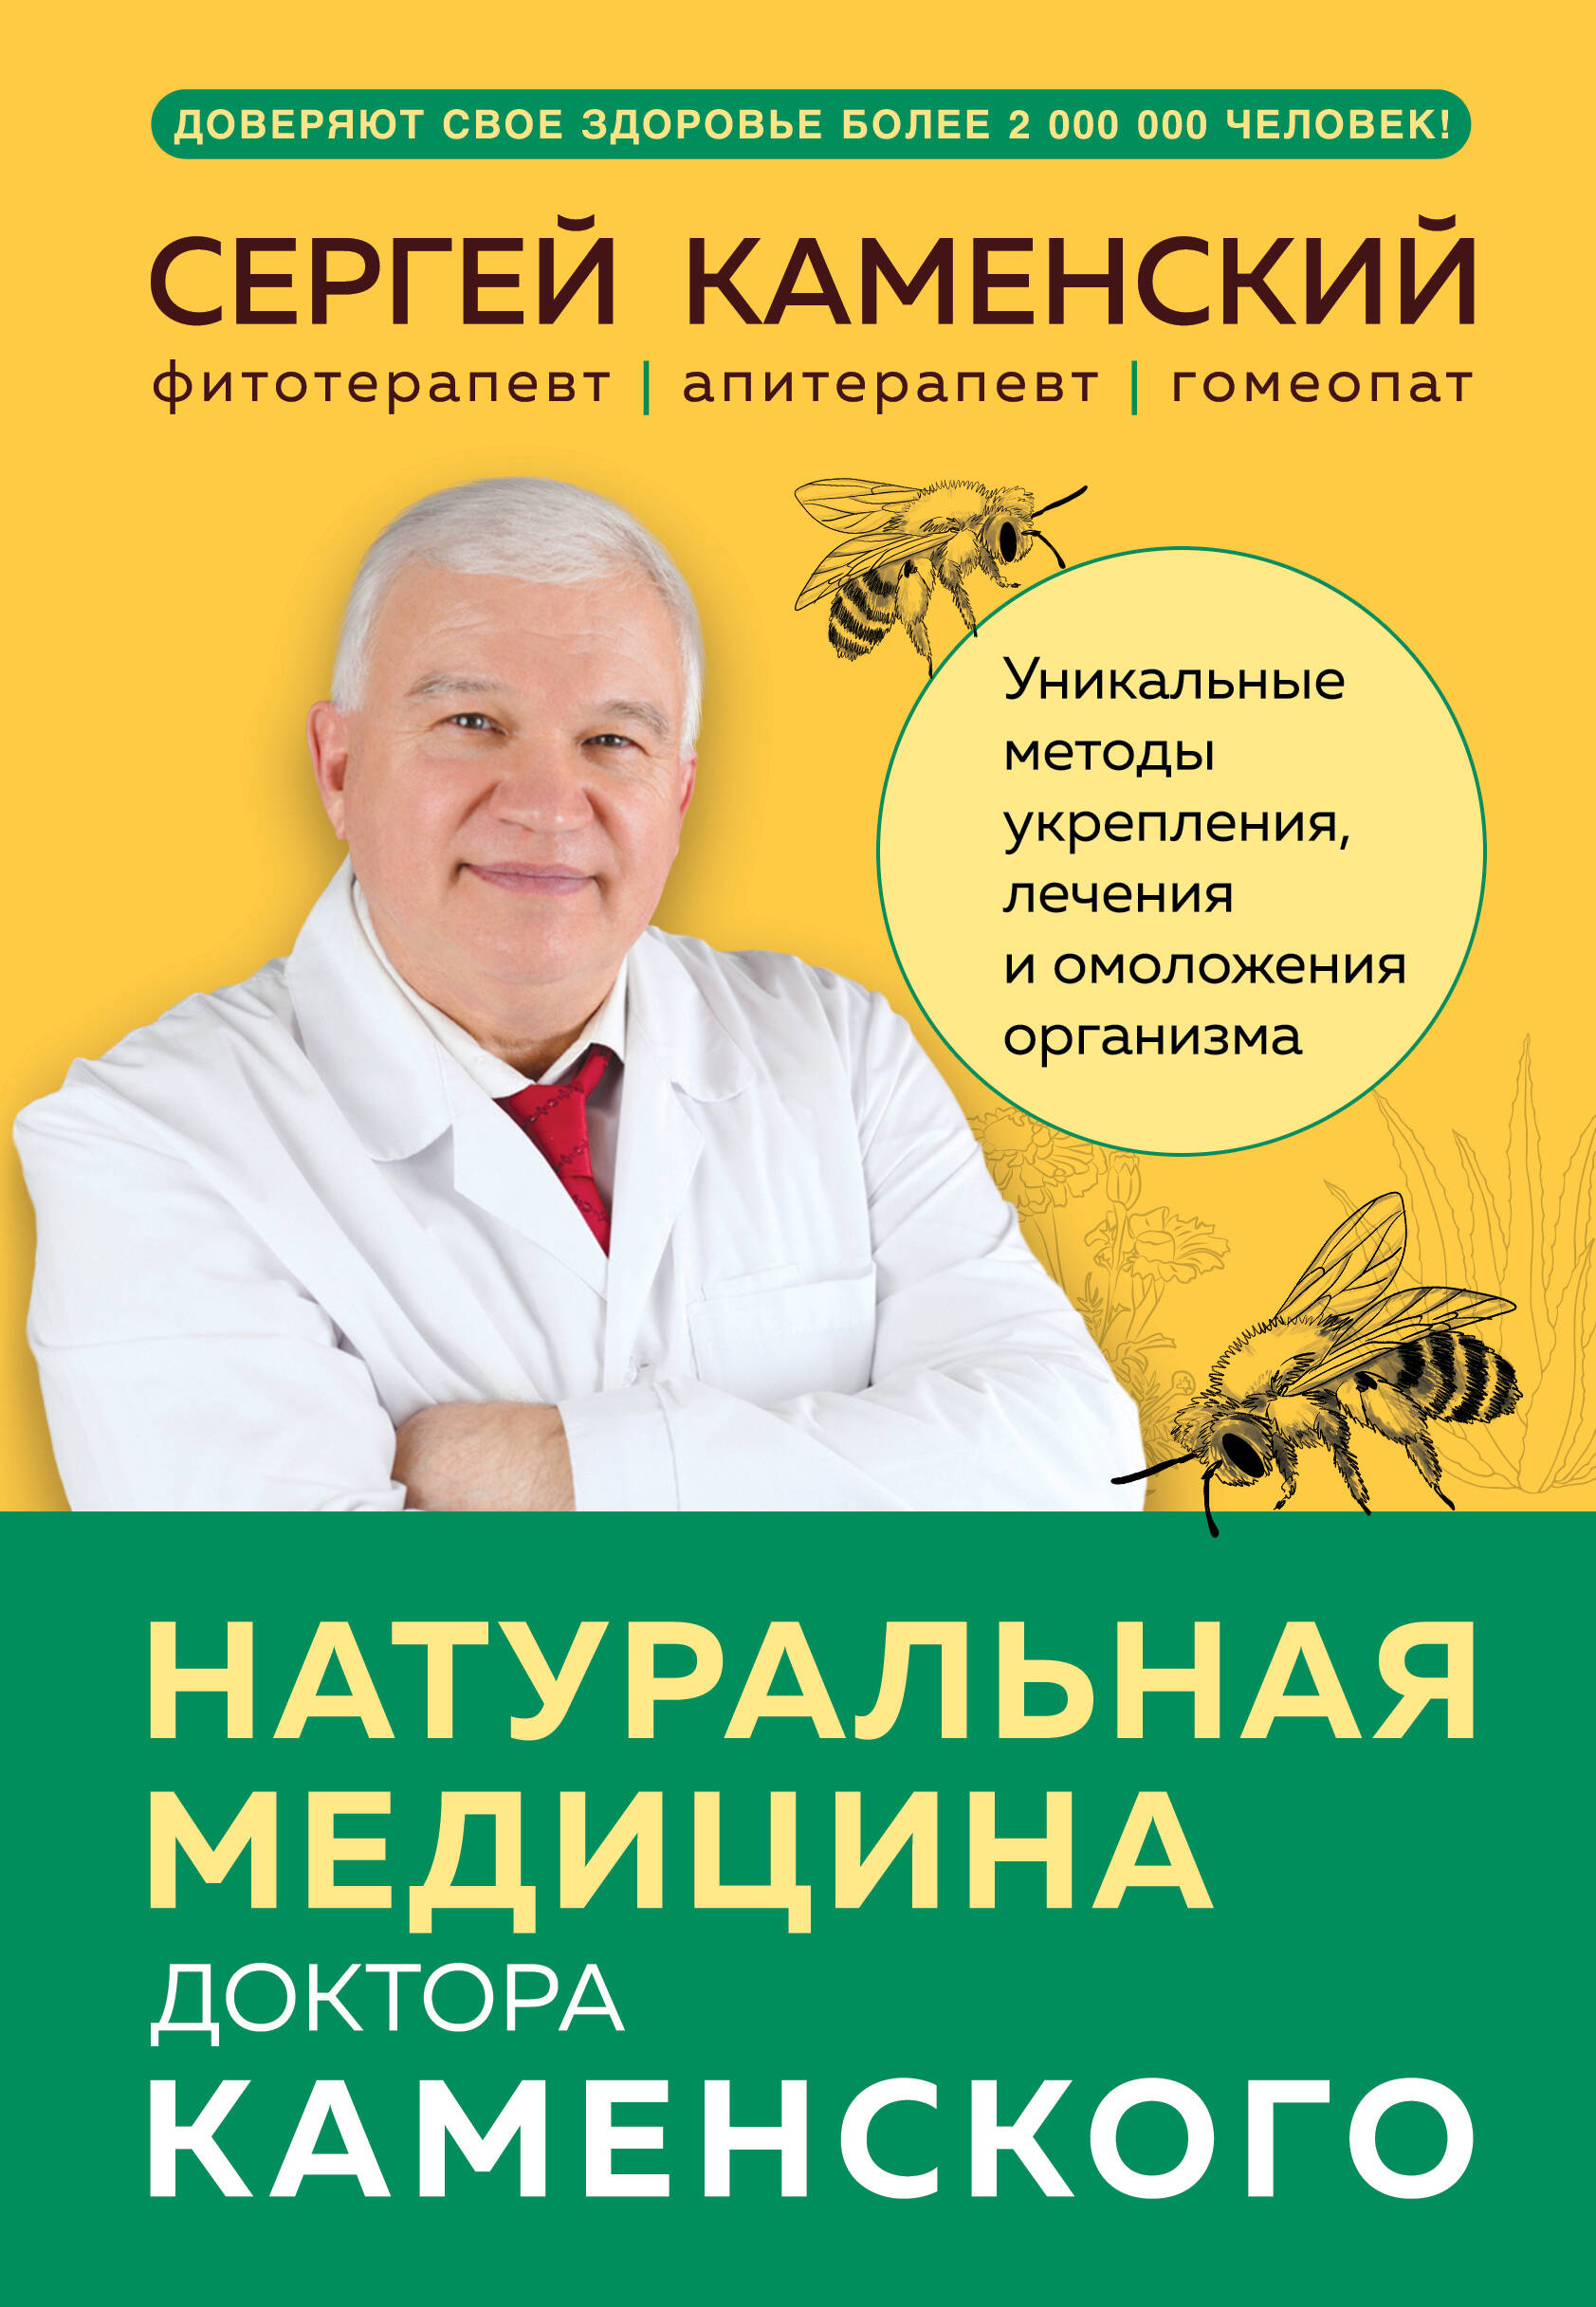 Natural medicine of Dr. Kamensky. Unique methods of strengthening, treating and rejuvenating the body